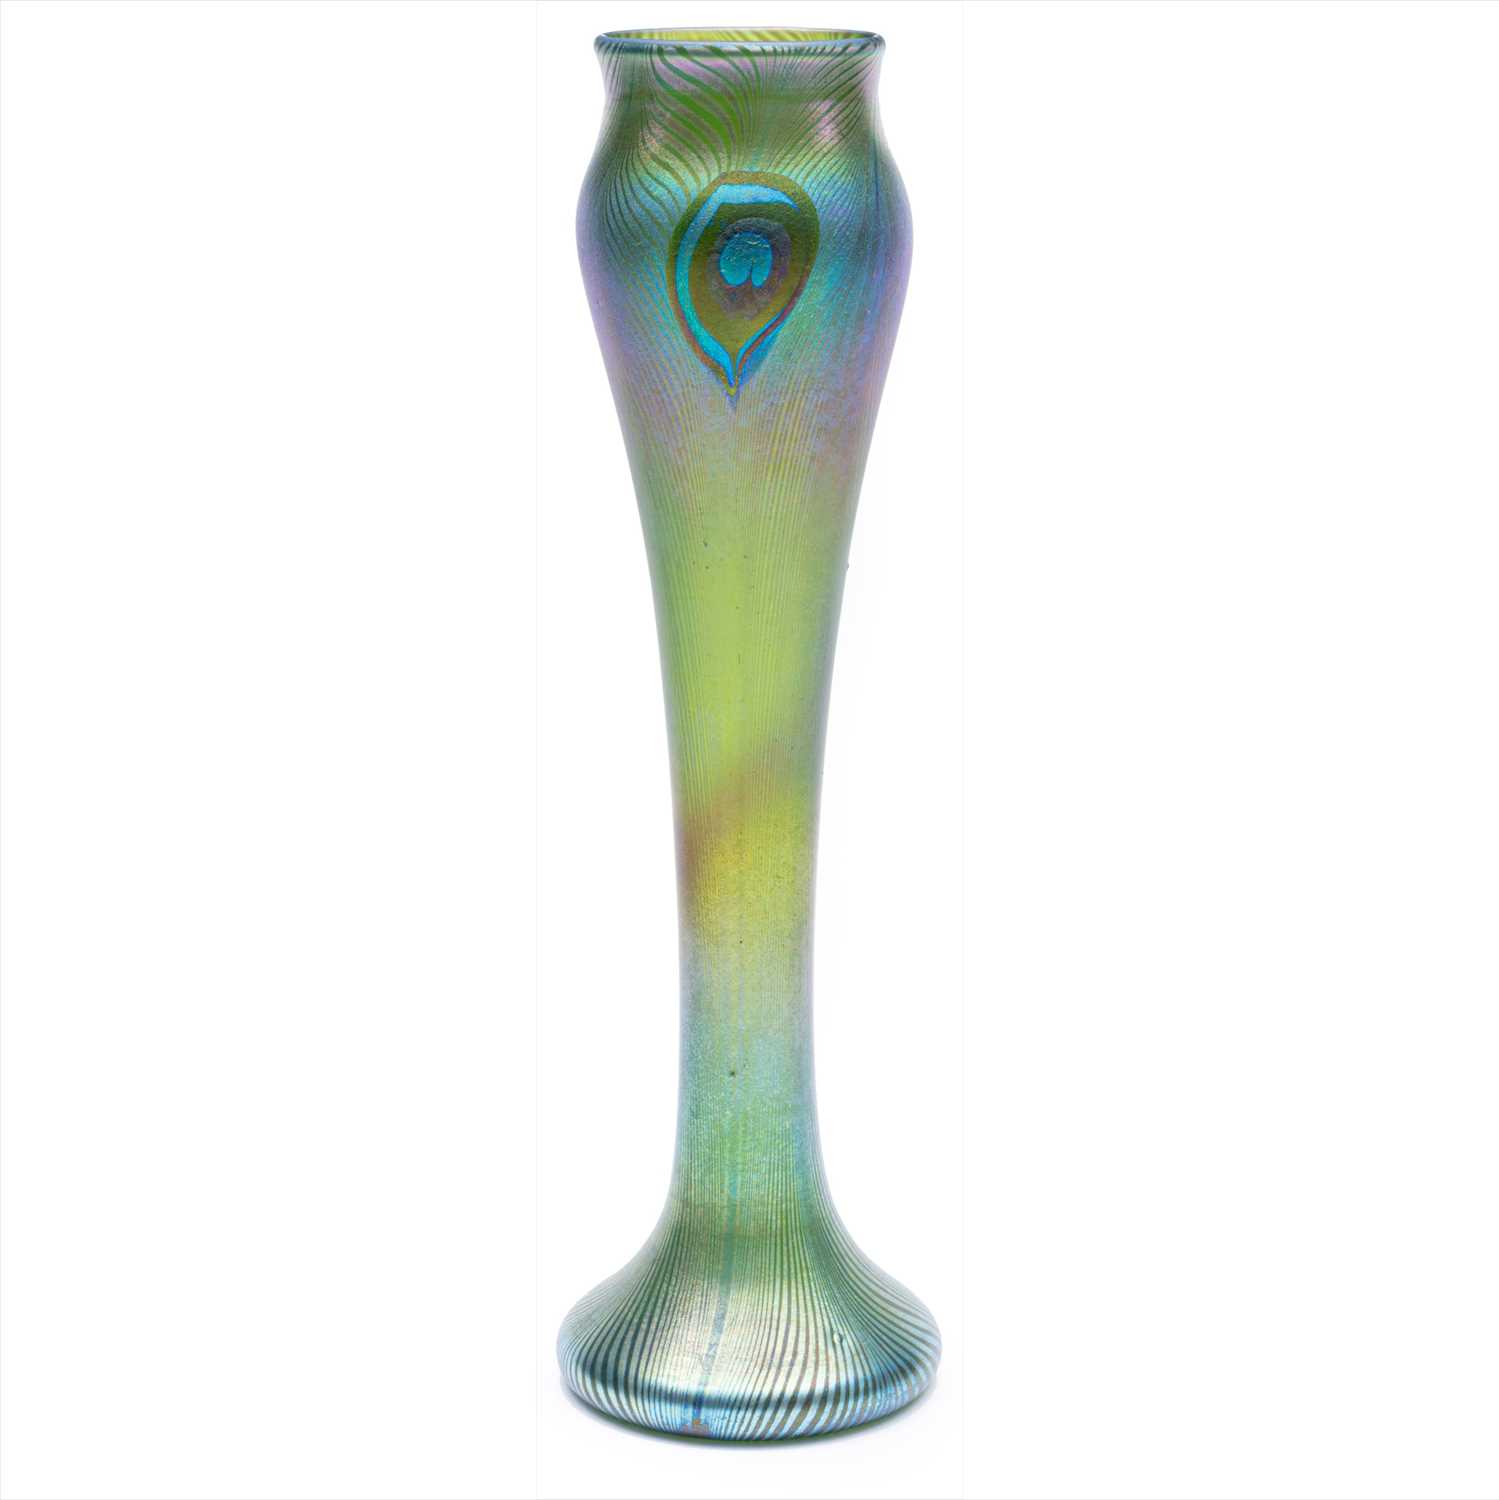 106 - A 'Peacock' Favrile glass vase, by Tiffany Studios, circa 1896.